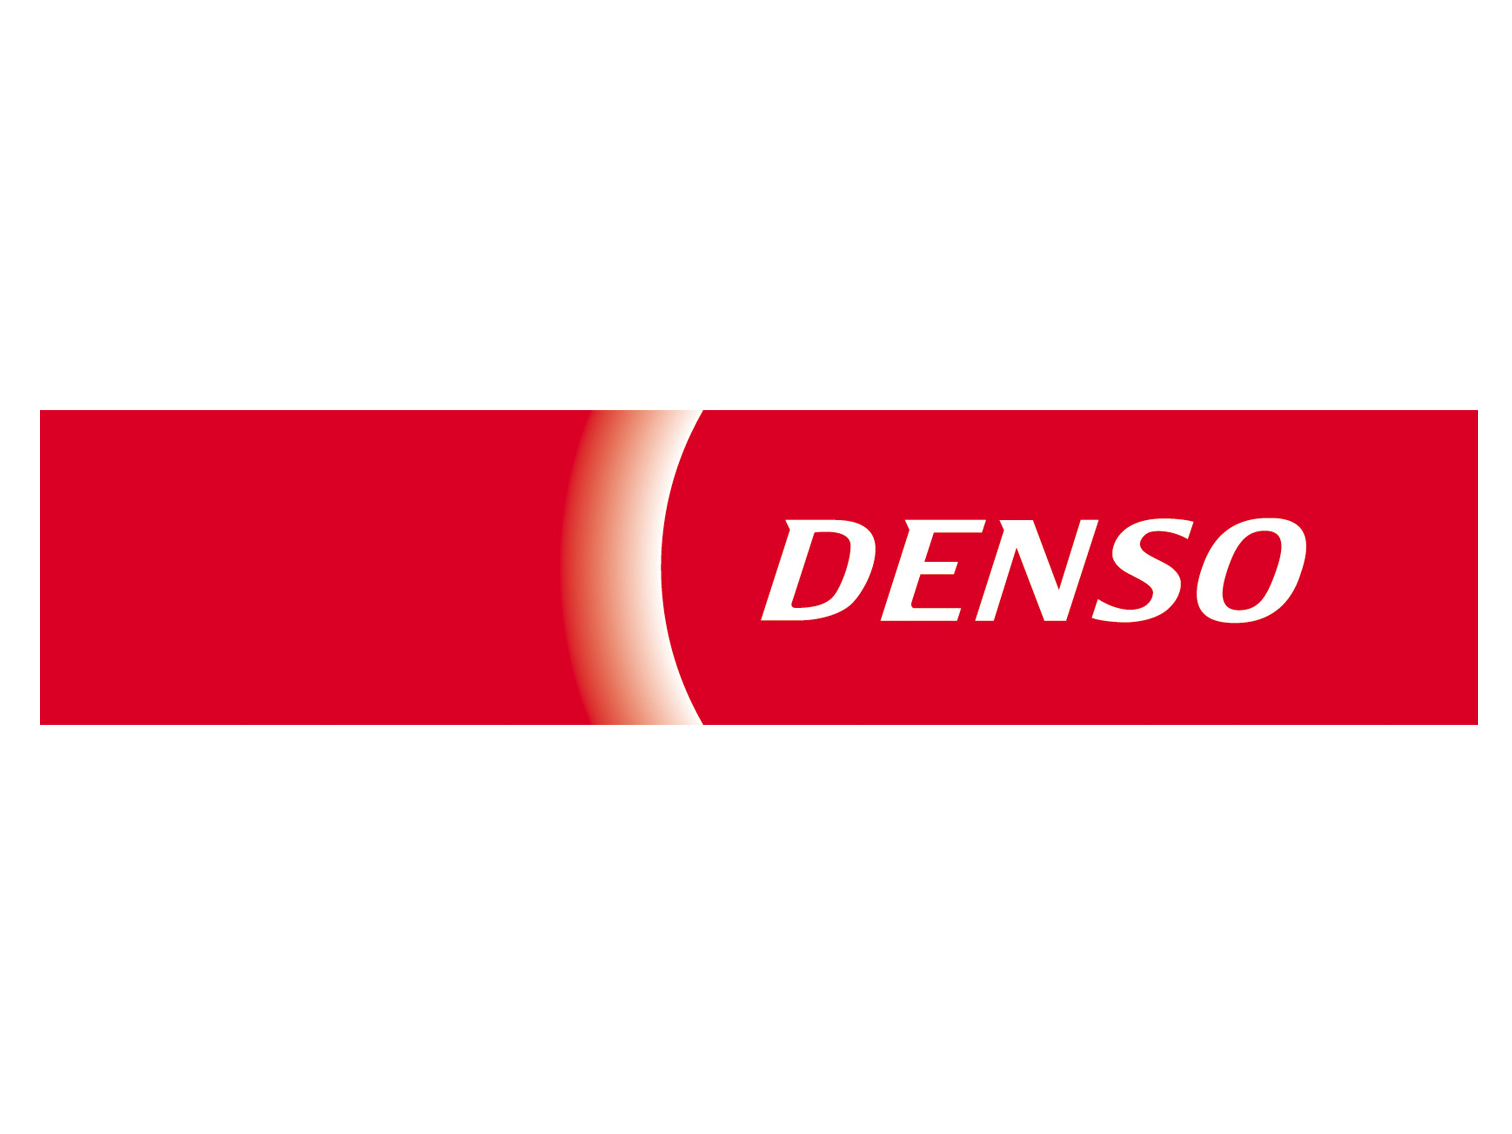 Logo Denso